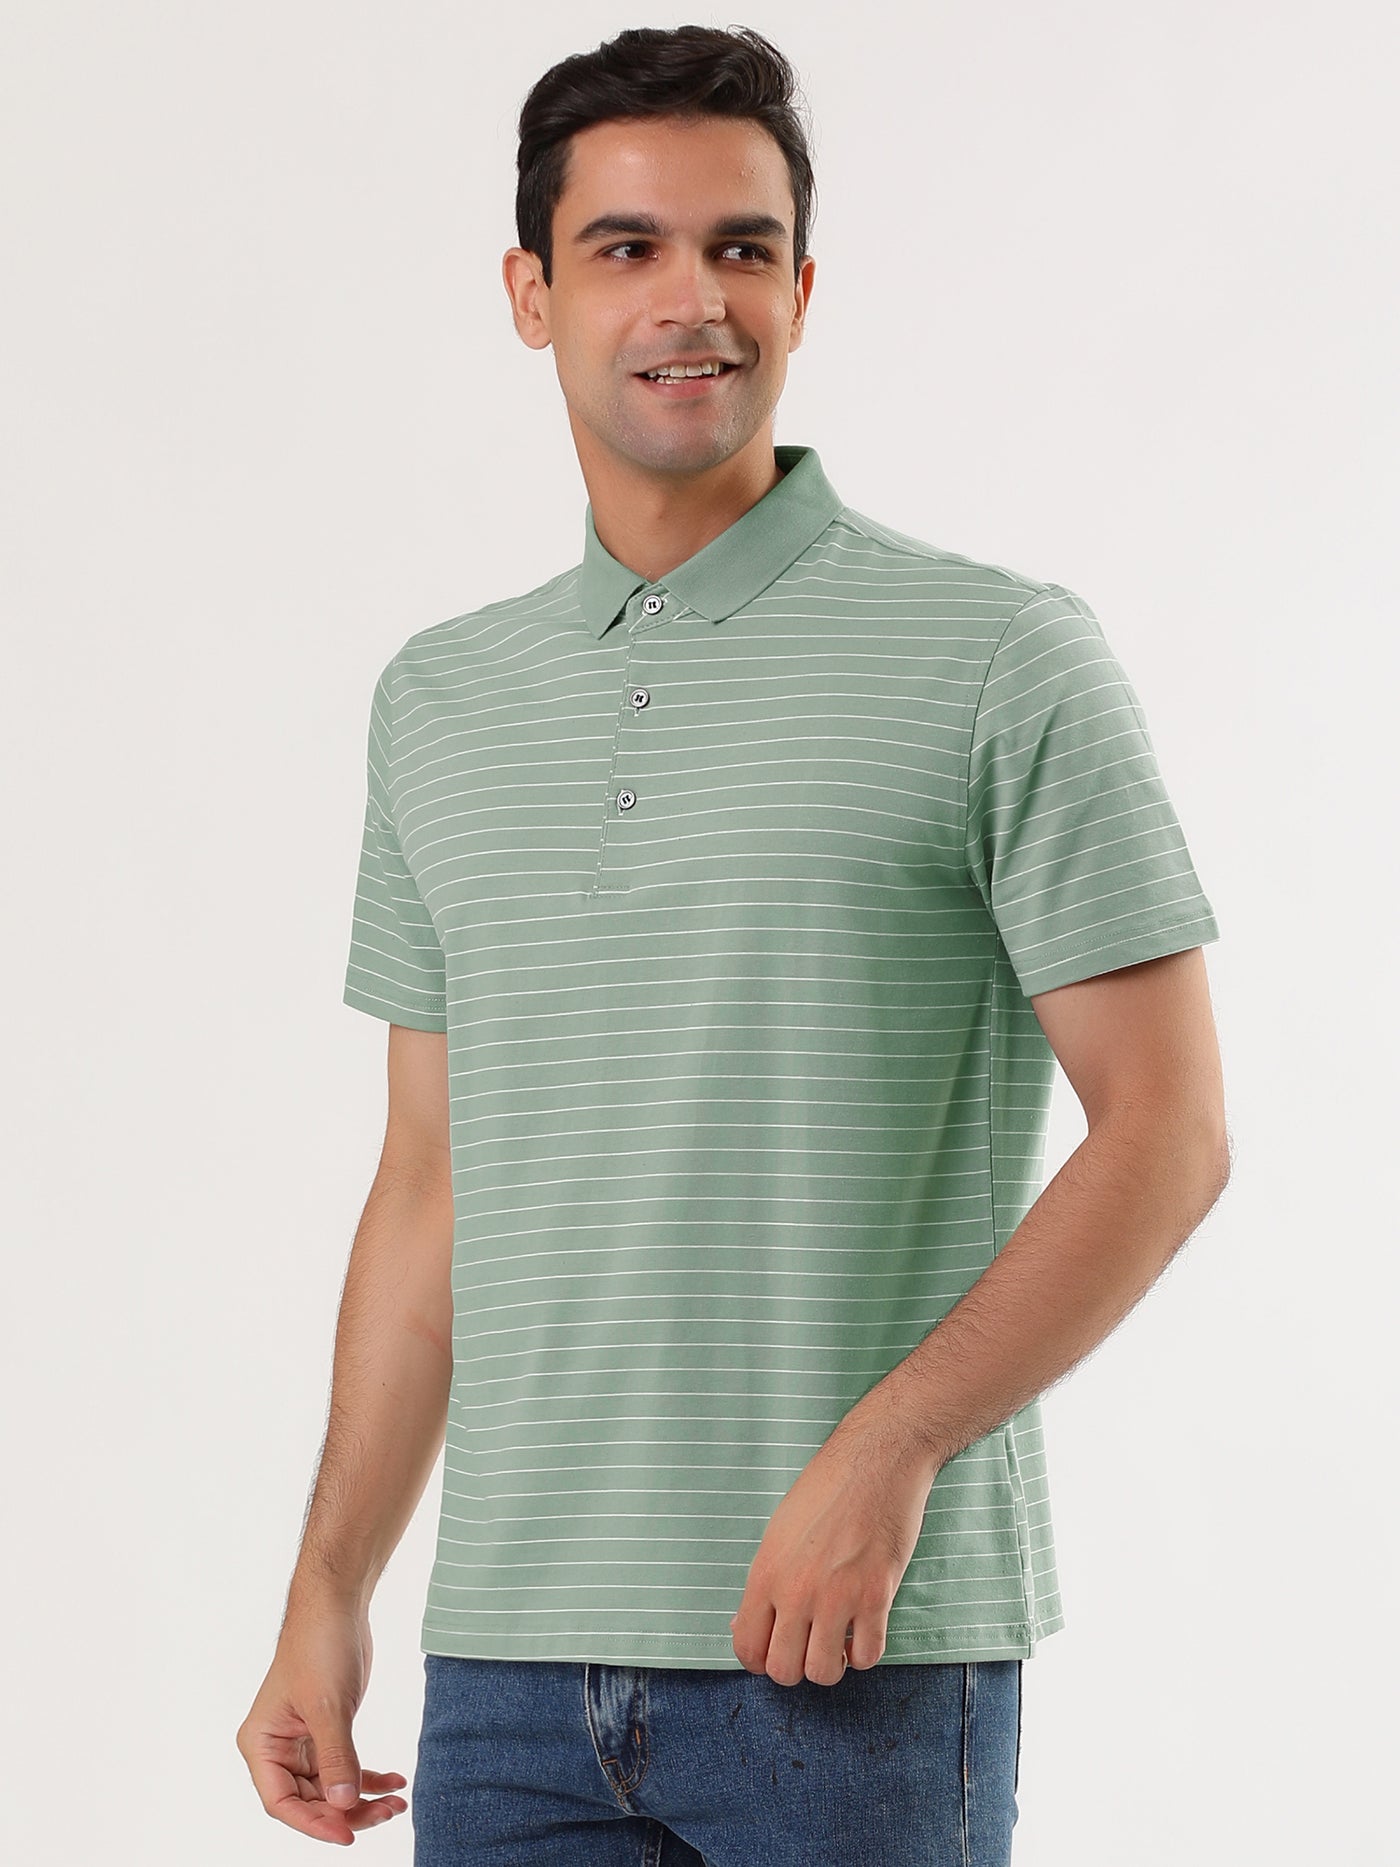 Bublédon Men's Casual Striped Golf Short Sleeves Polo Shirt